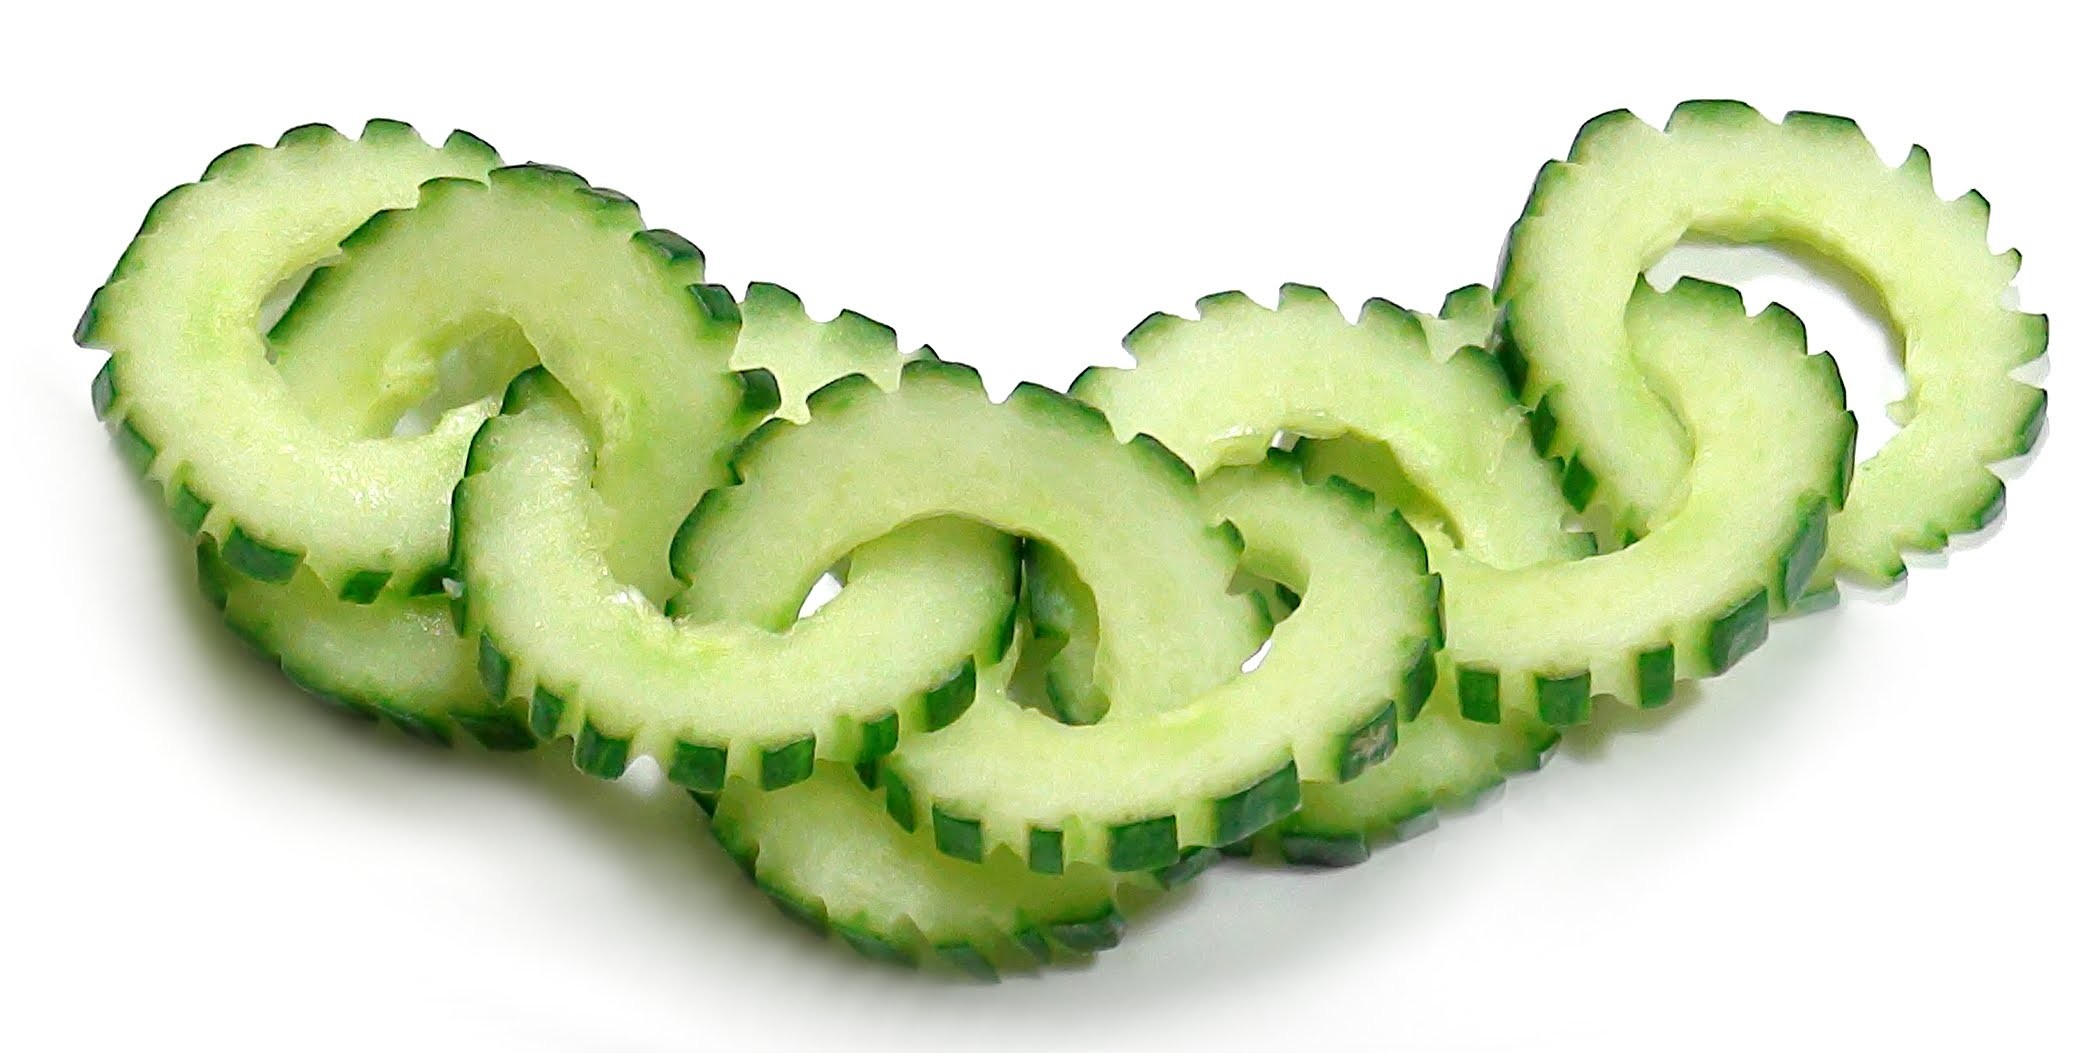 021. Free vegetable carving course cucumber chain. Darmowy kurs carvingu łańcuszek z ogórka